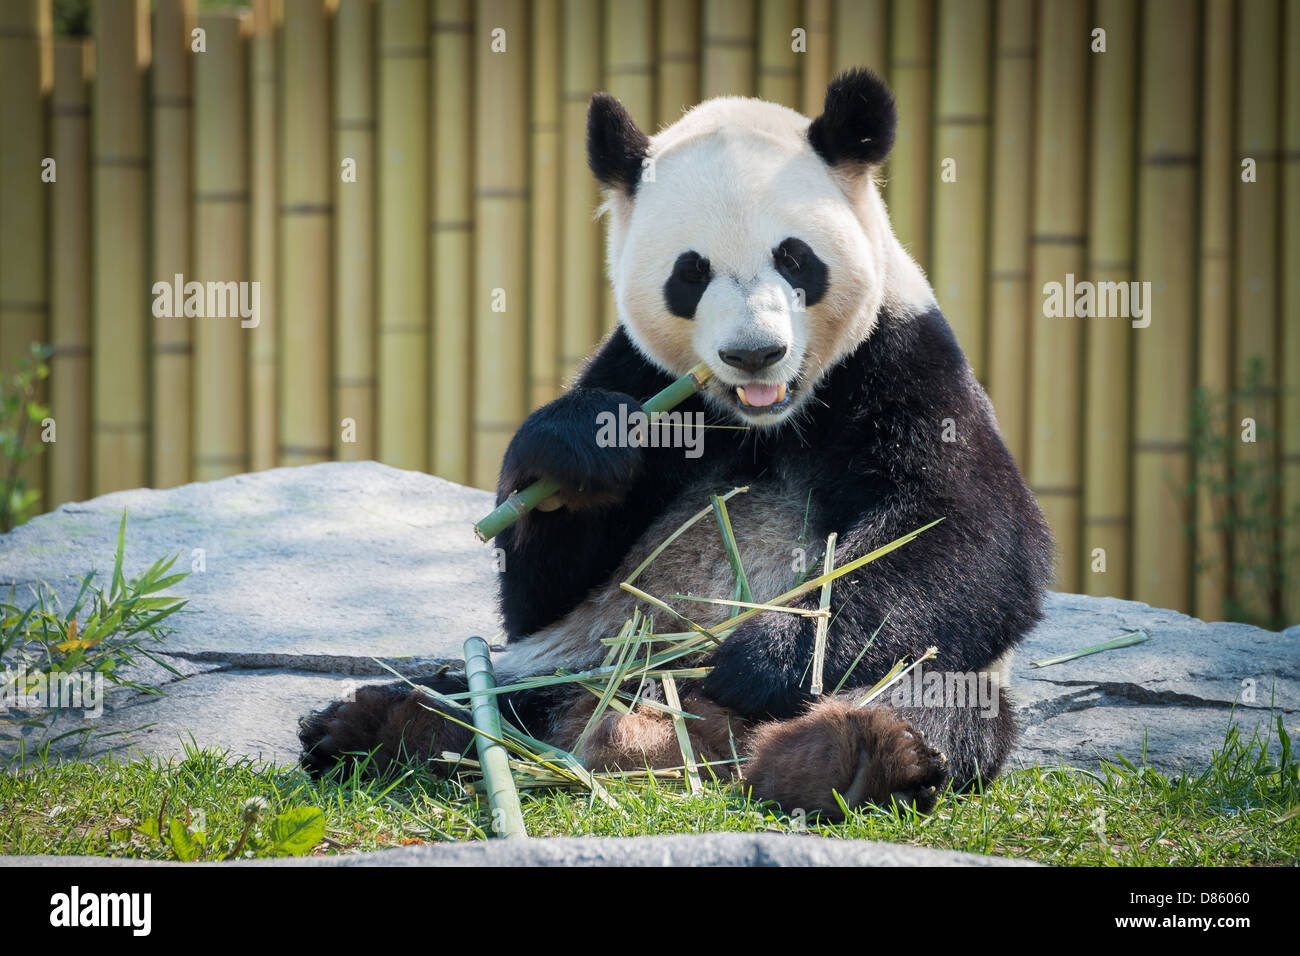 Zoo de Toronto pandas. Banque D'Images